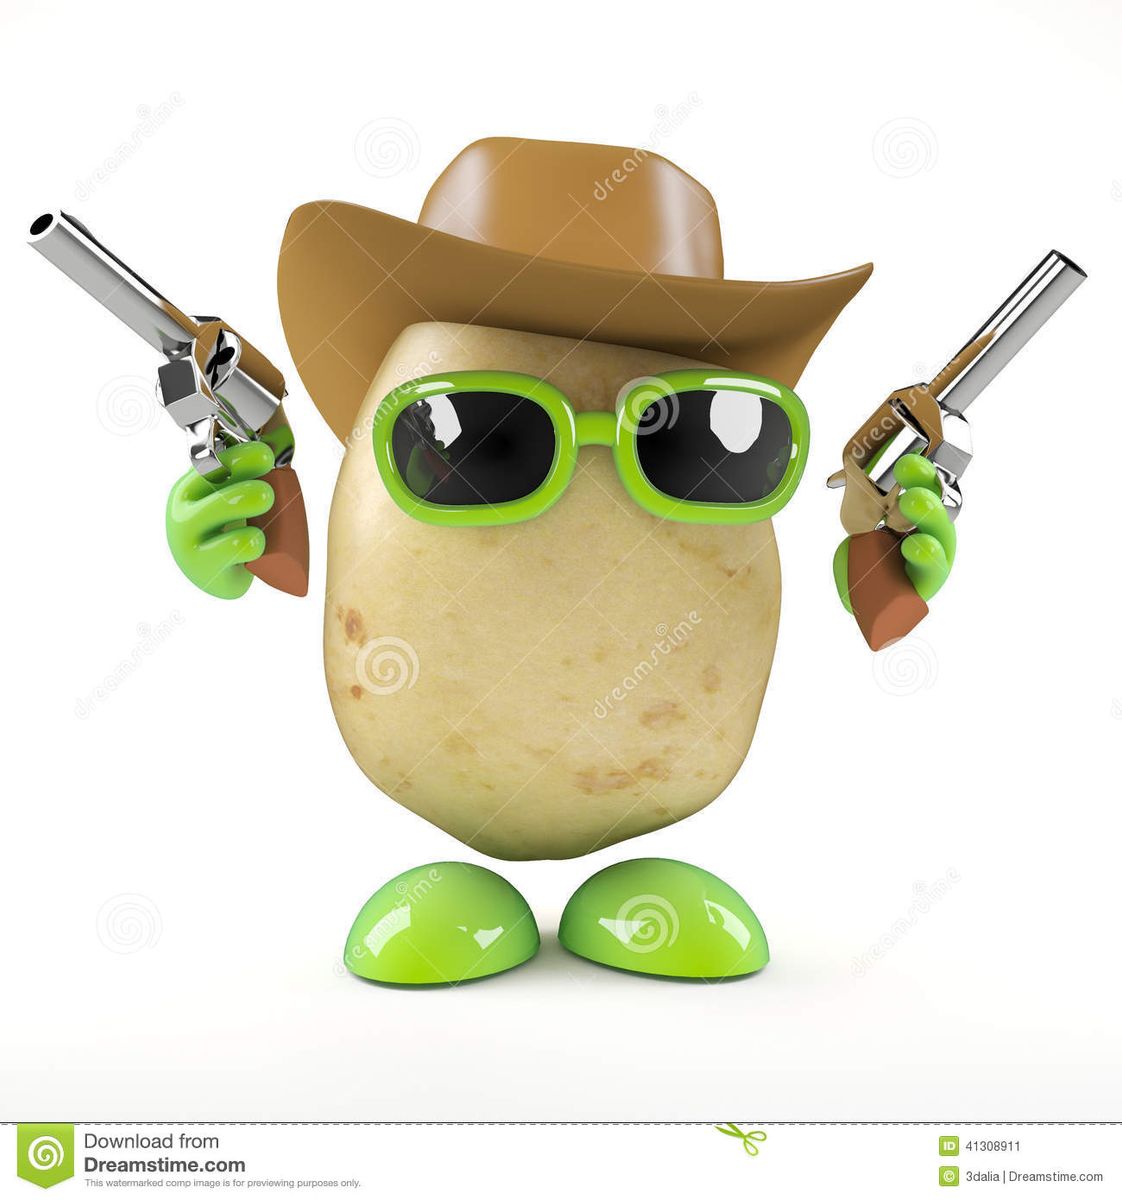 d-cowboy-potato-render-dressed-as-holding-two-guns-41308911.jpg